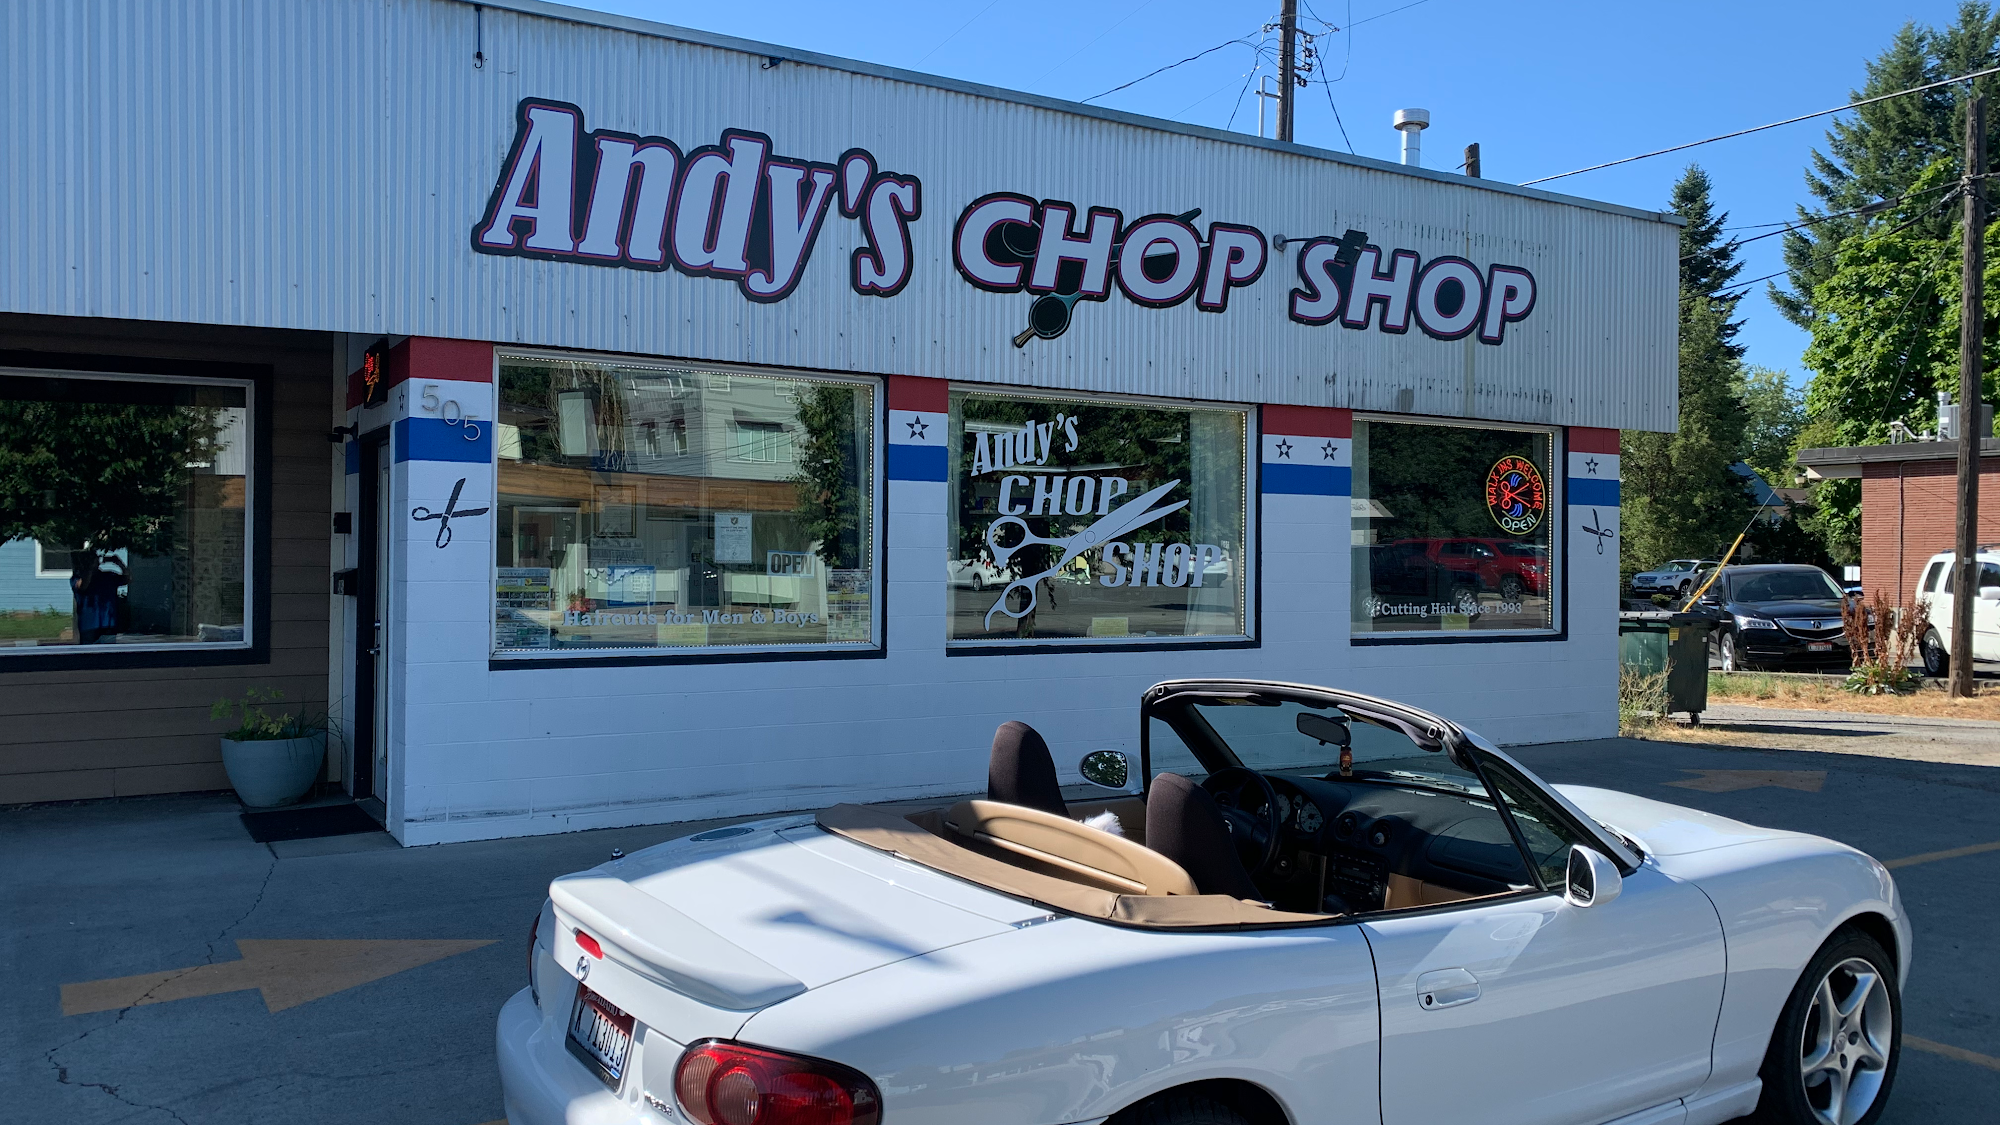 Andy's Chop Shop